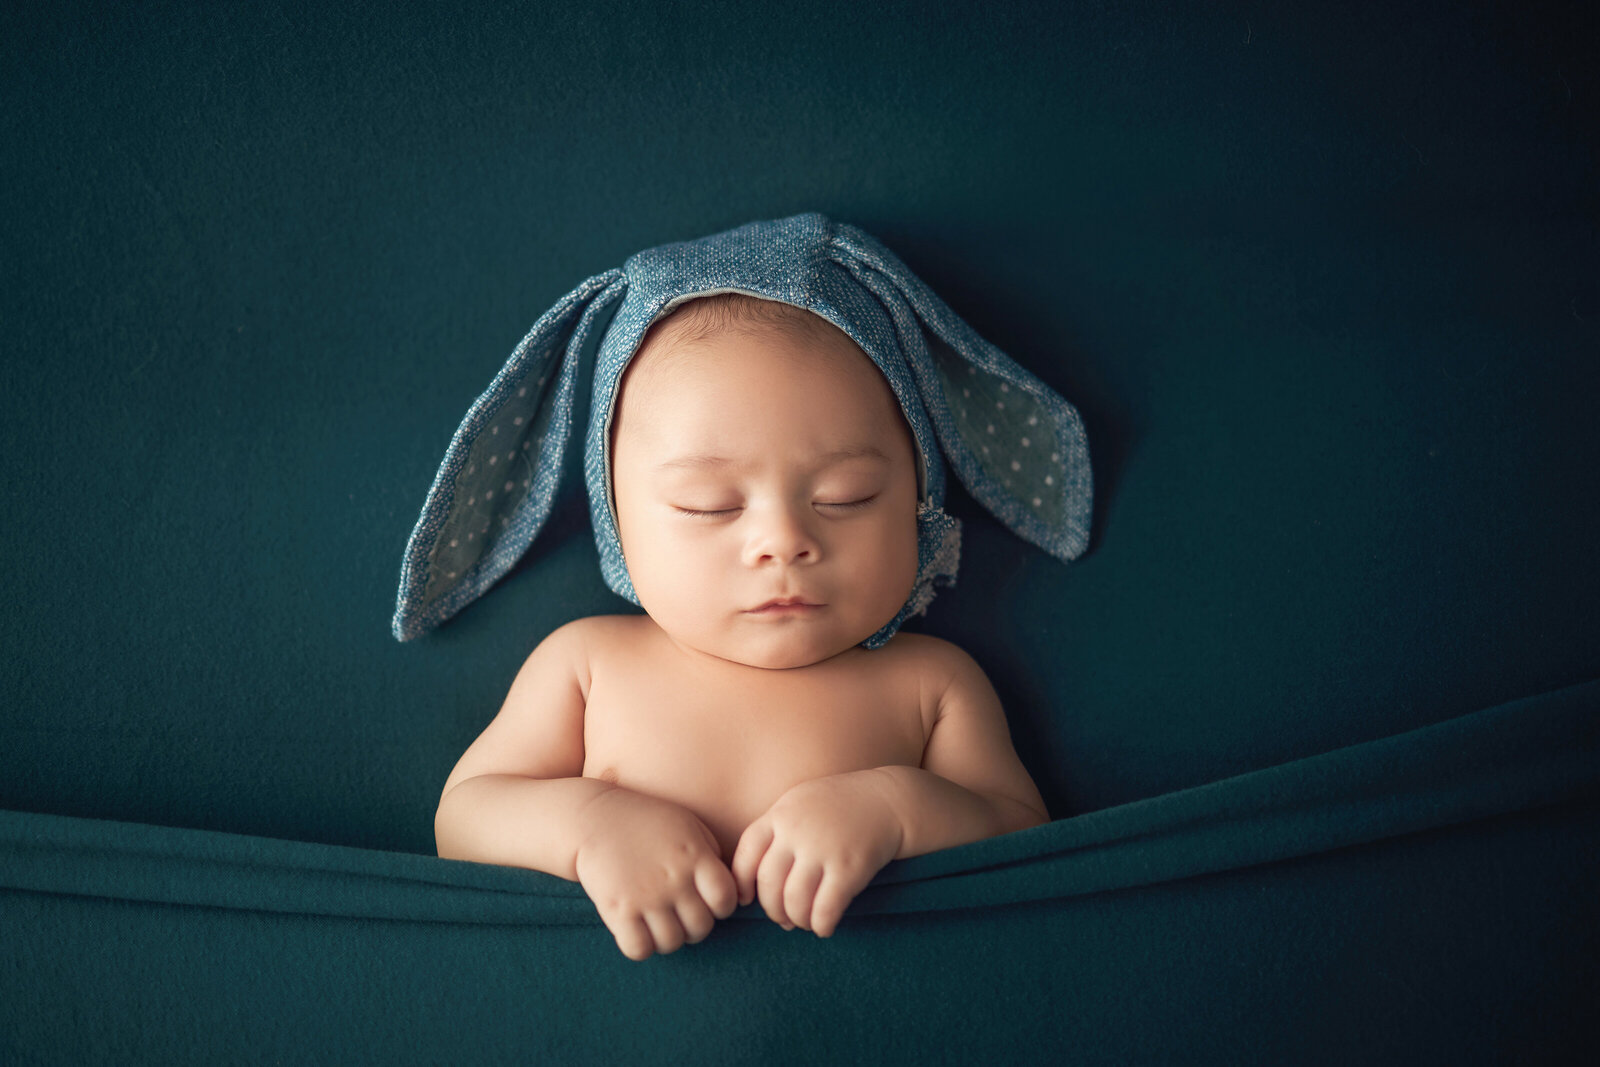 atlanta-best-award-winning-newborn-wrapped-blue-teal-milestone-bunny-ears-month-months-boy-baby-portrait-studio-photography-photographer-twin-rivers-01